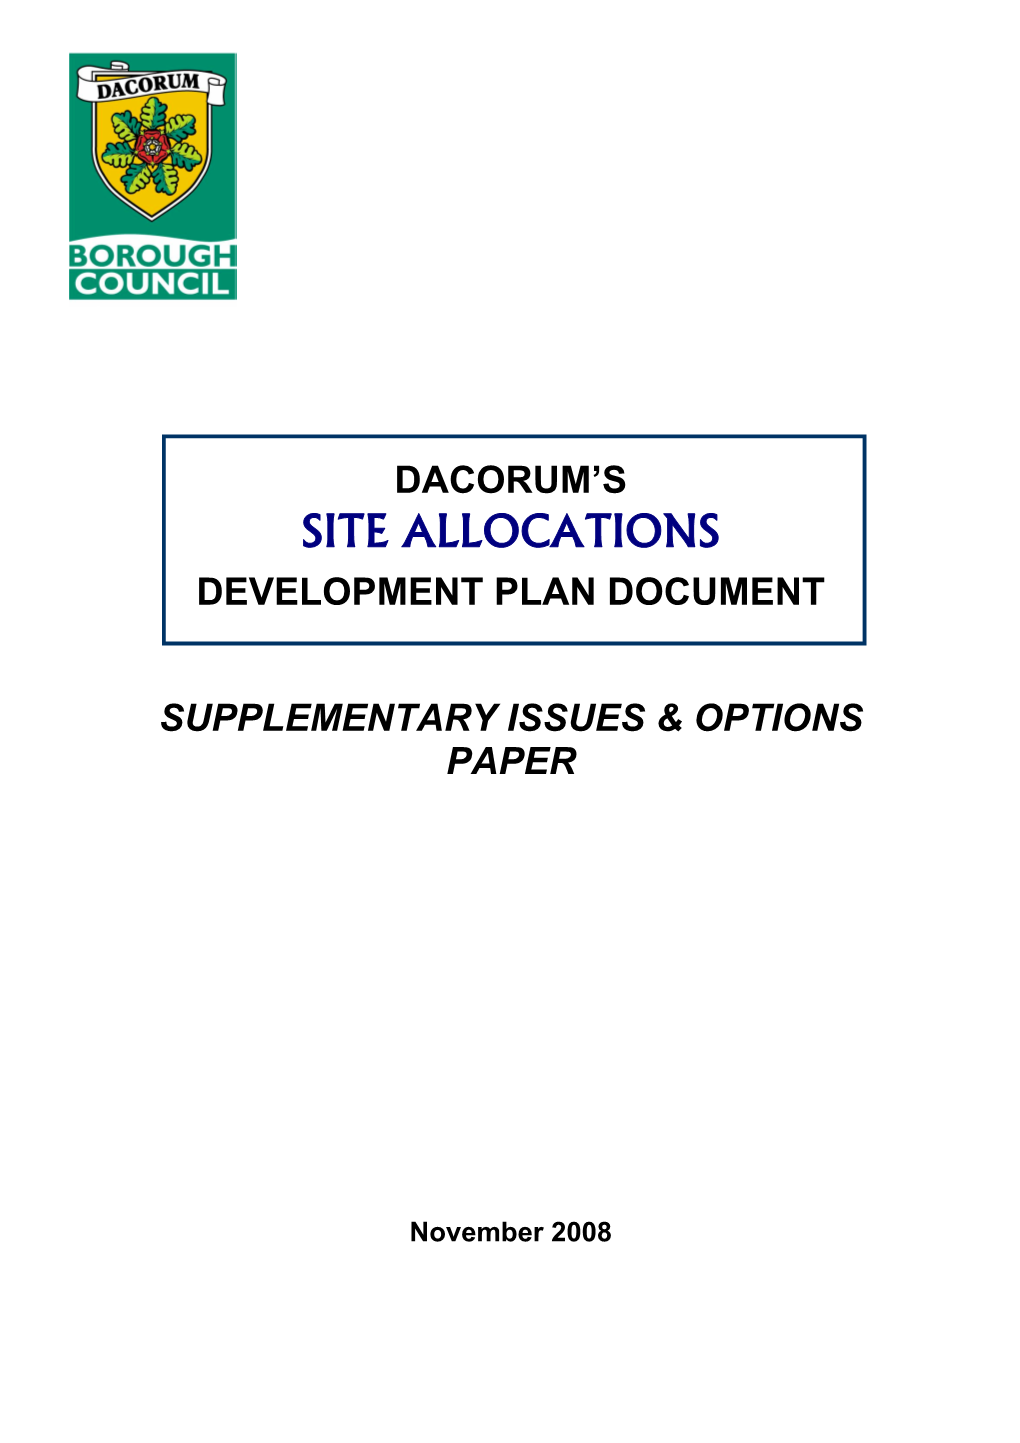 Site Allocations Development Plan Document